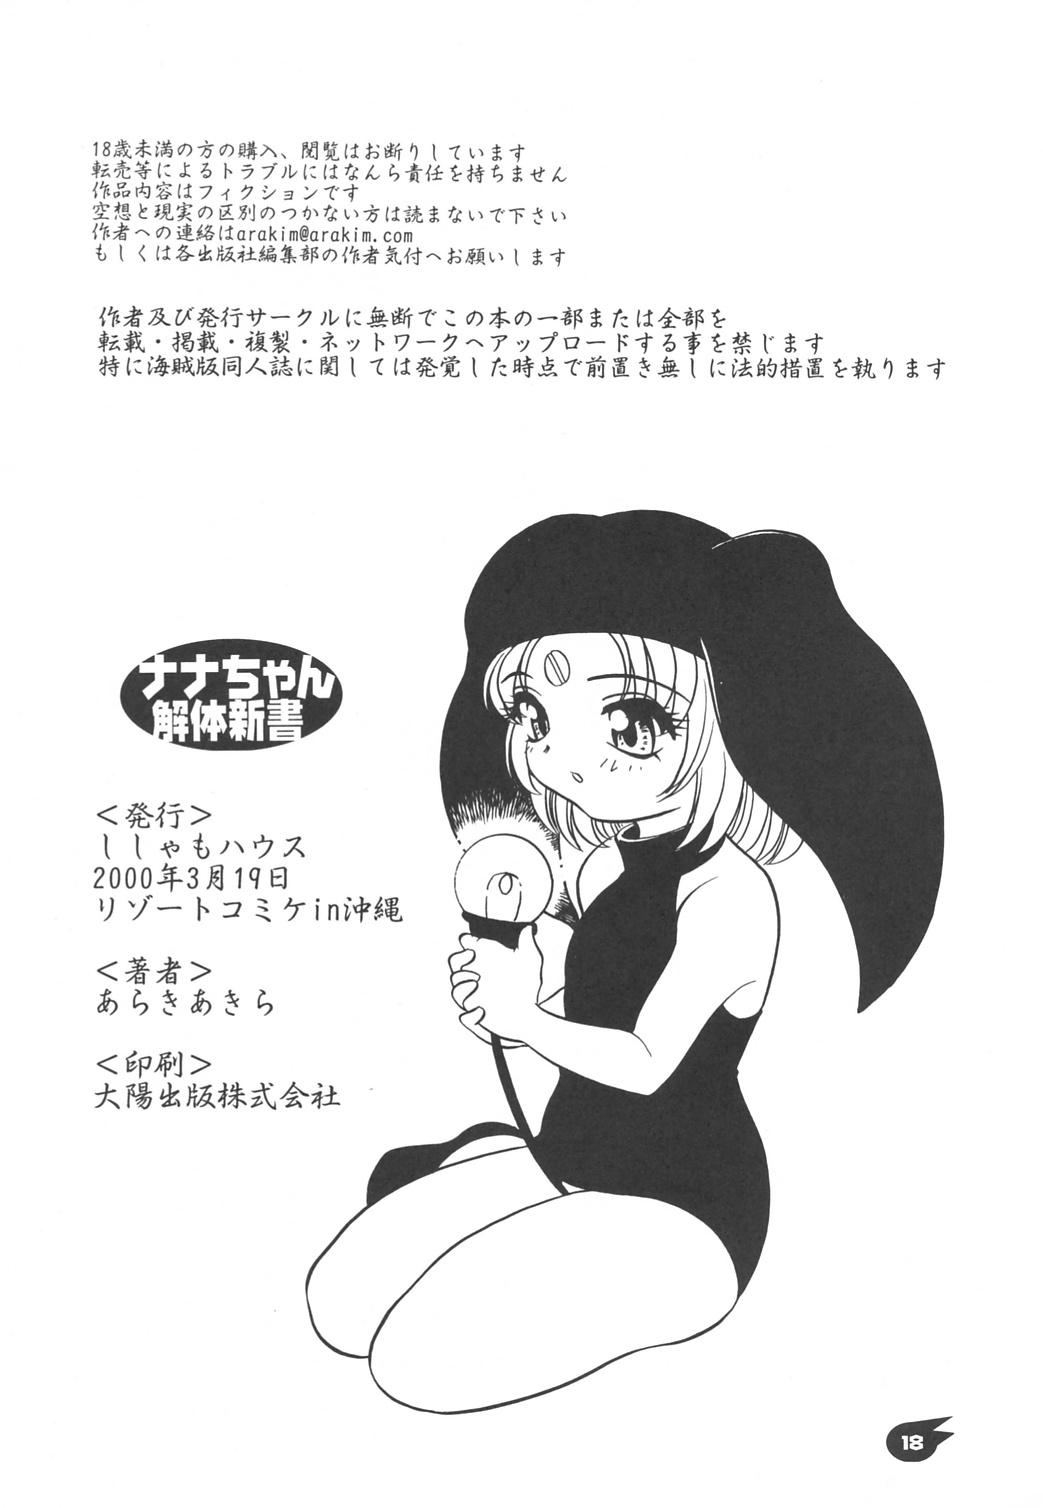 Nana-chan's Fan Book 16